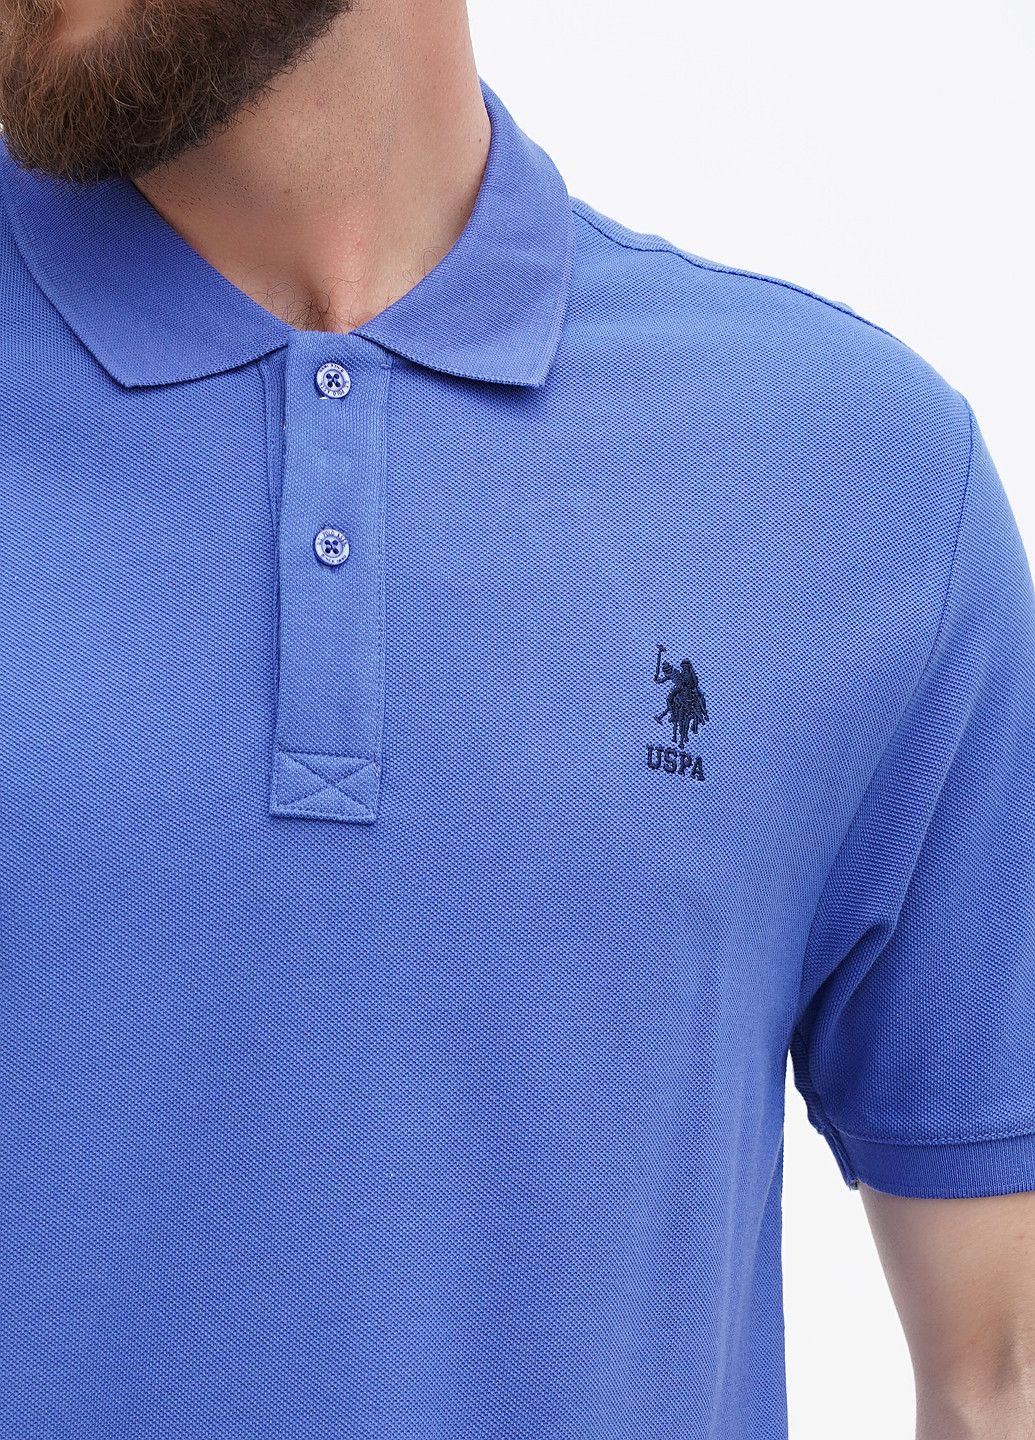 Синяя футболка-футболка поло u.s. polo assn мужская для мужчин U.S. Polo Assn. однотонная